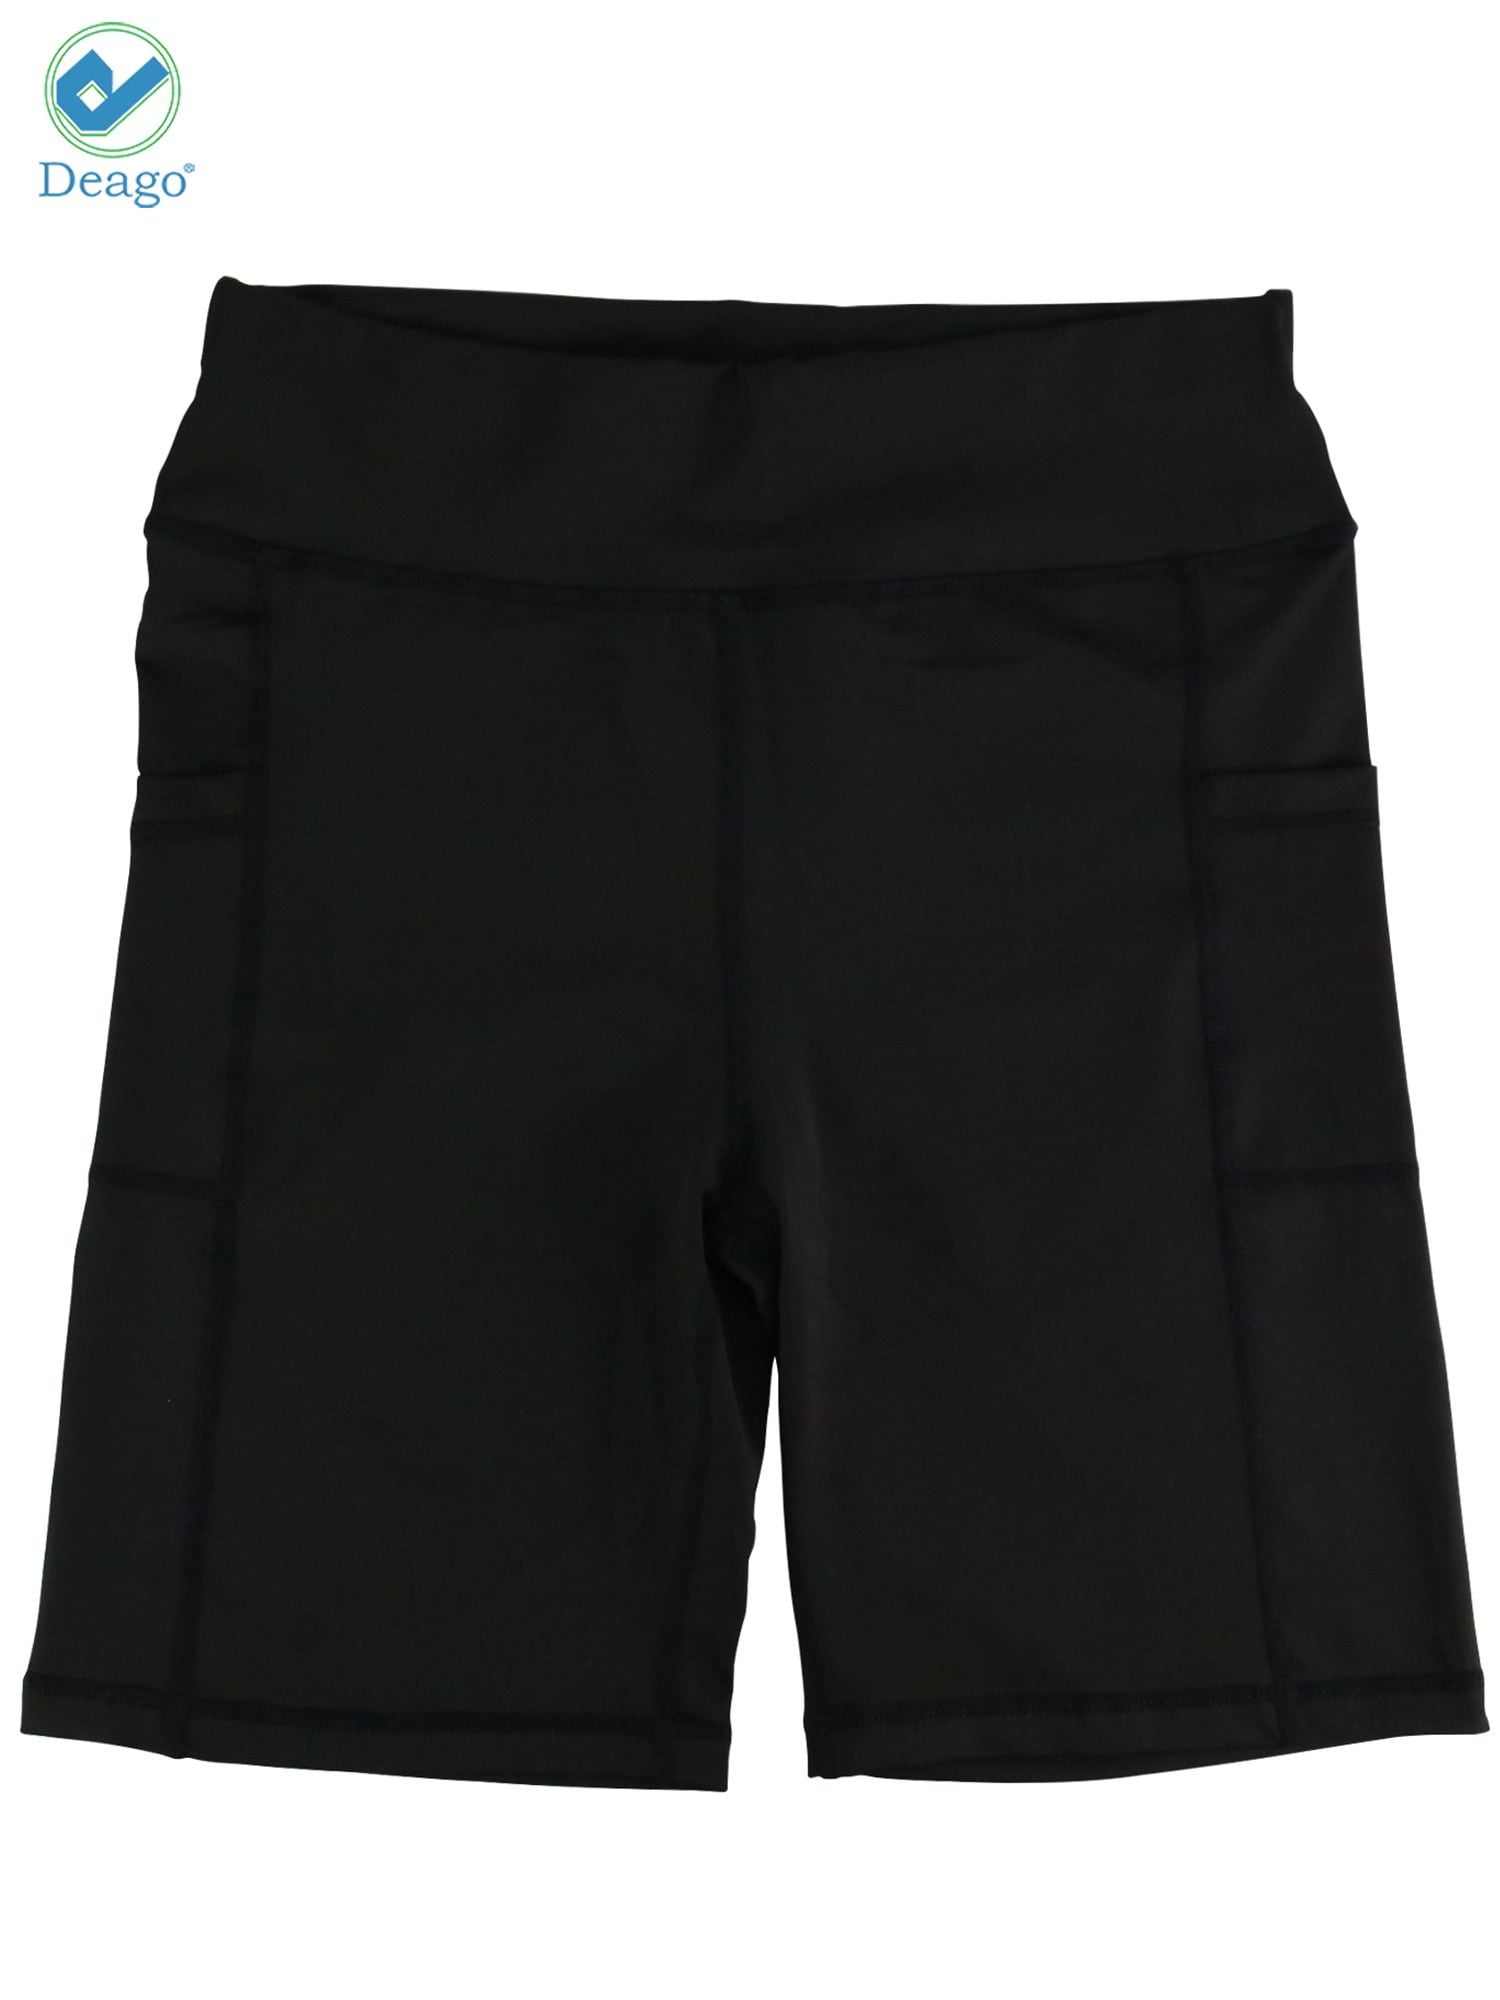 Deago Yoga Shorts for Women High Waist Workout Shorts Tummy Control Running Biker  Shorts with Side Pockets (Black, M) 